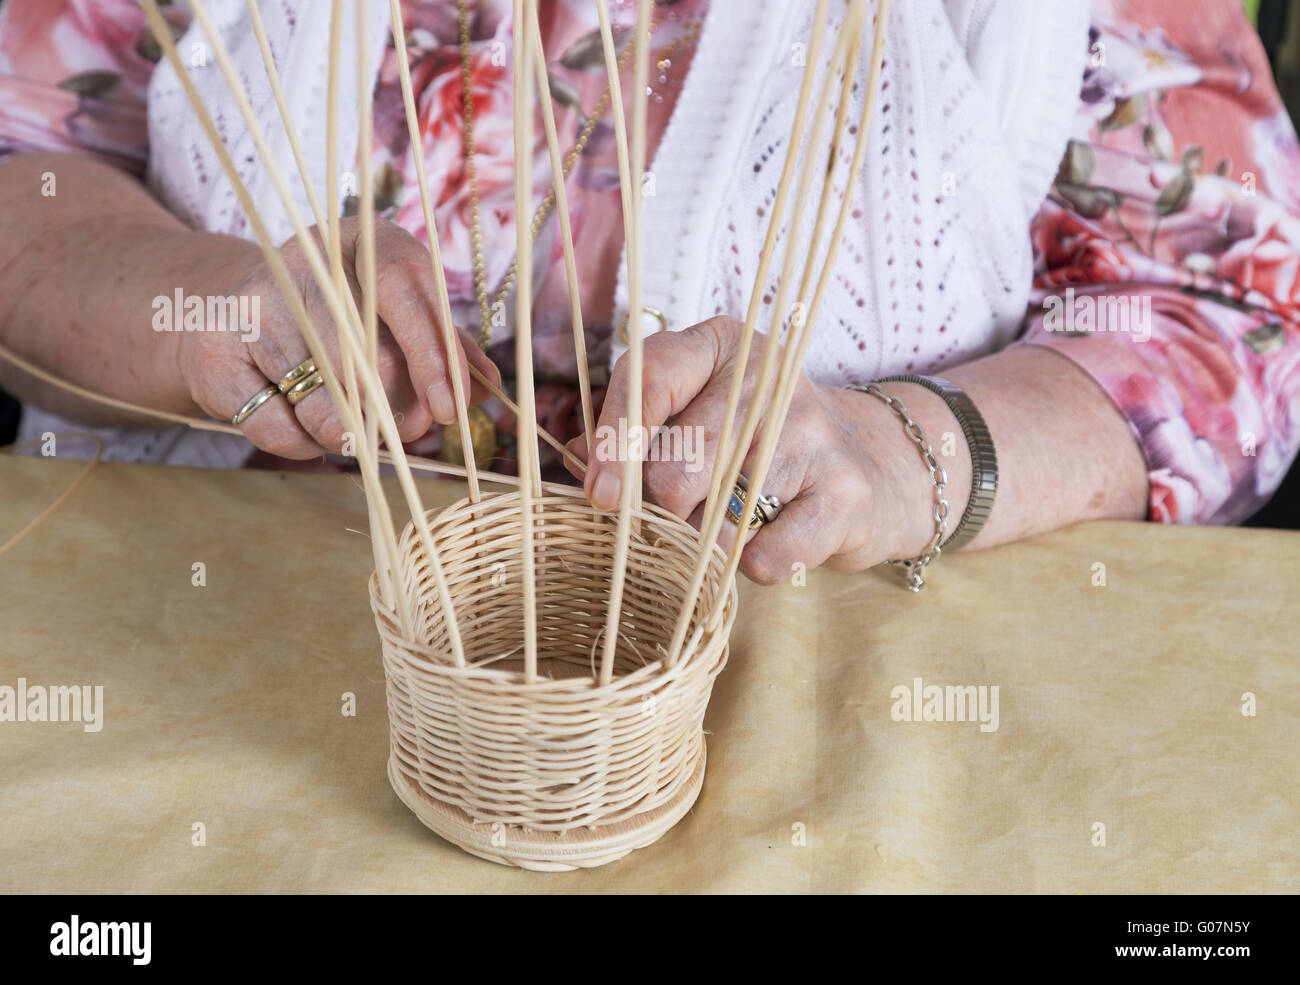 Hands of a novel senior citizen making baskets Stock Photo